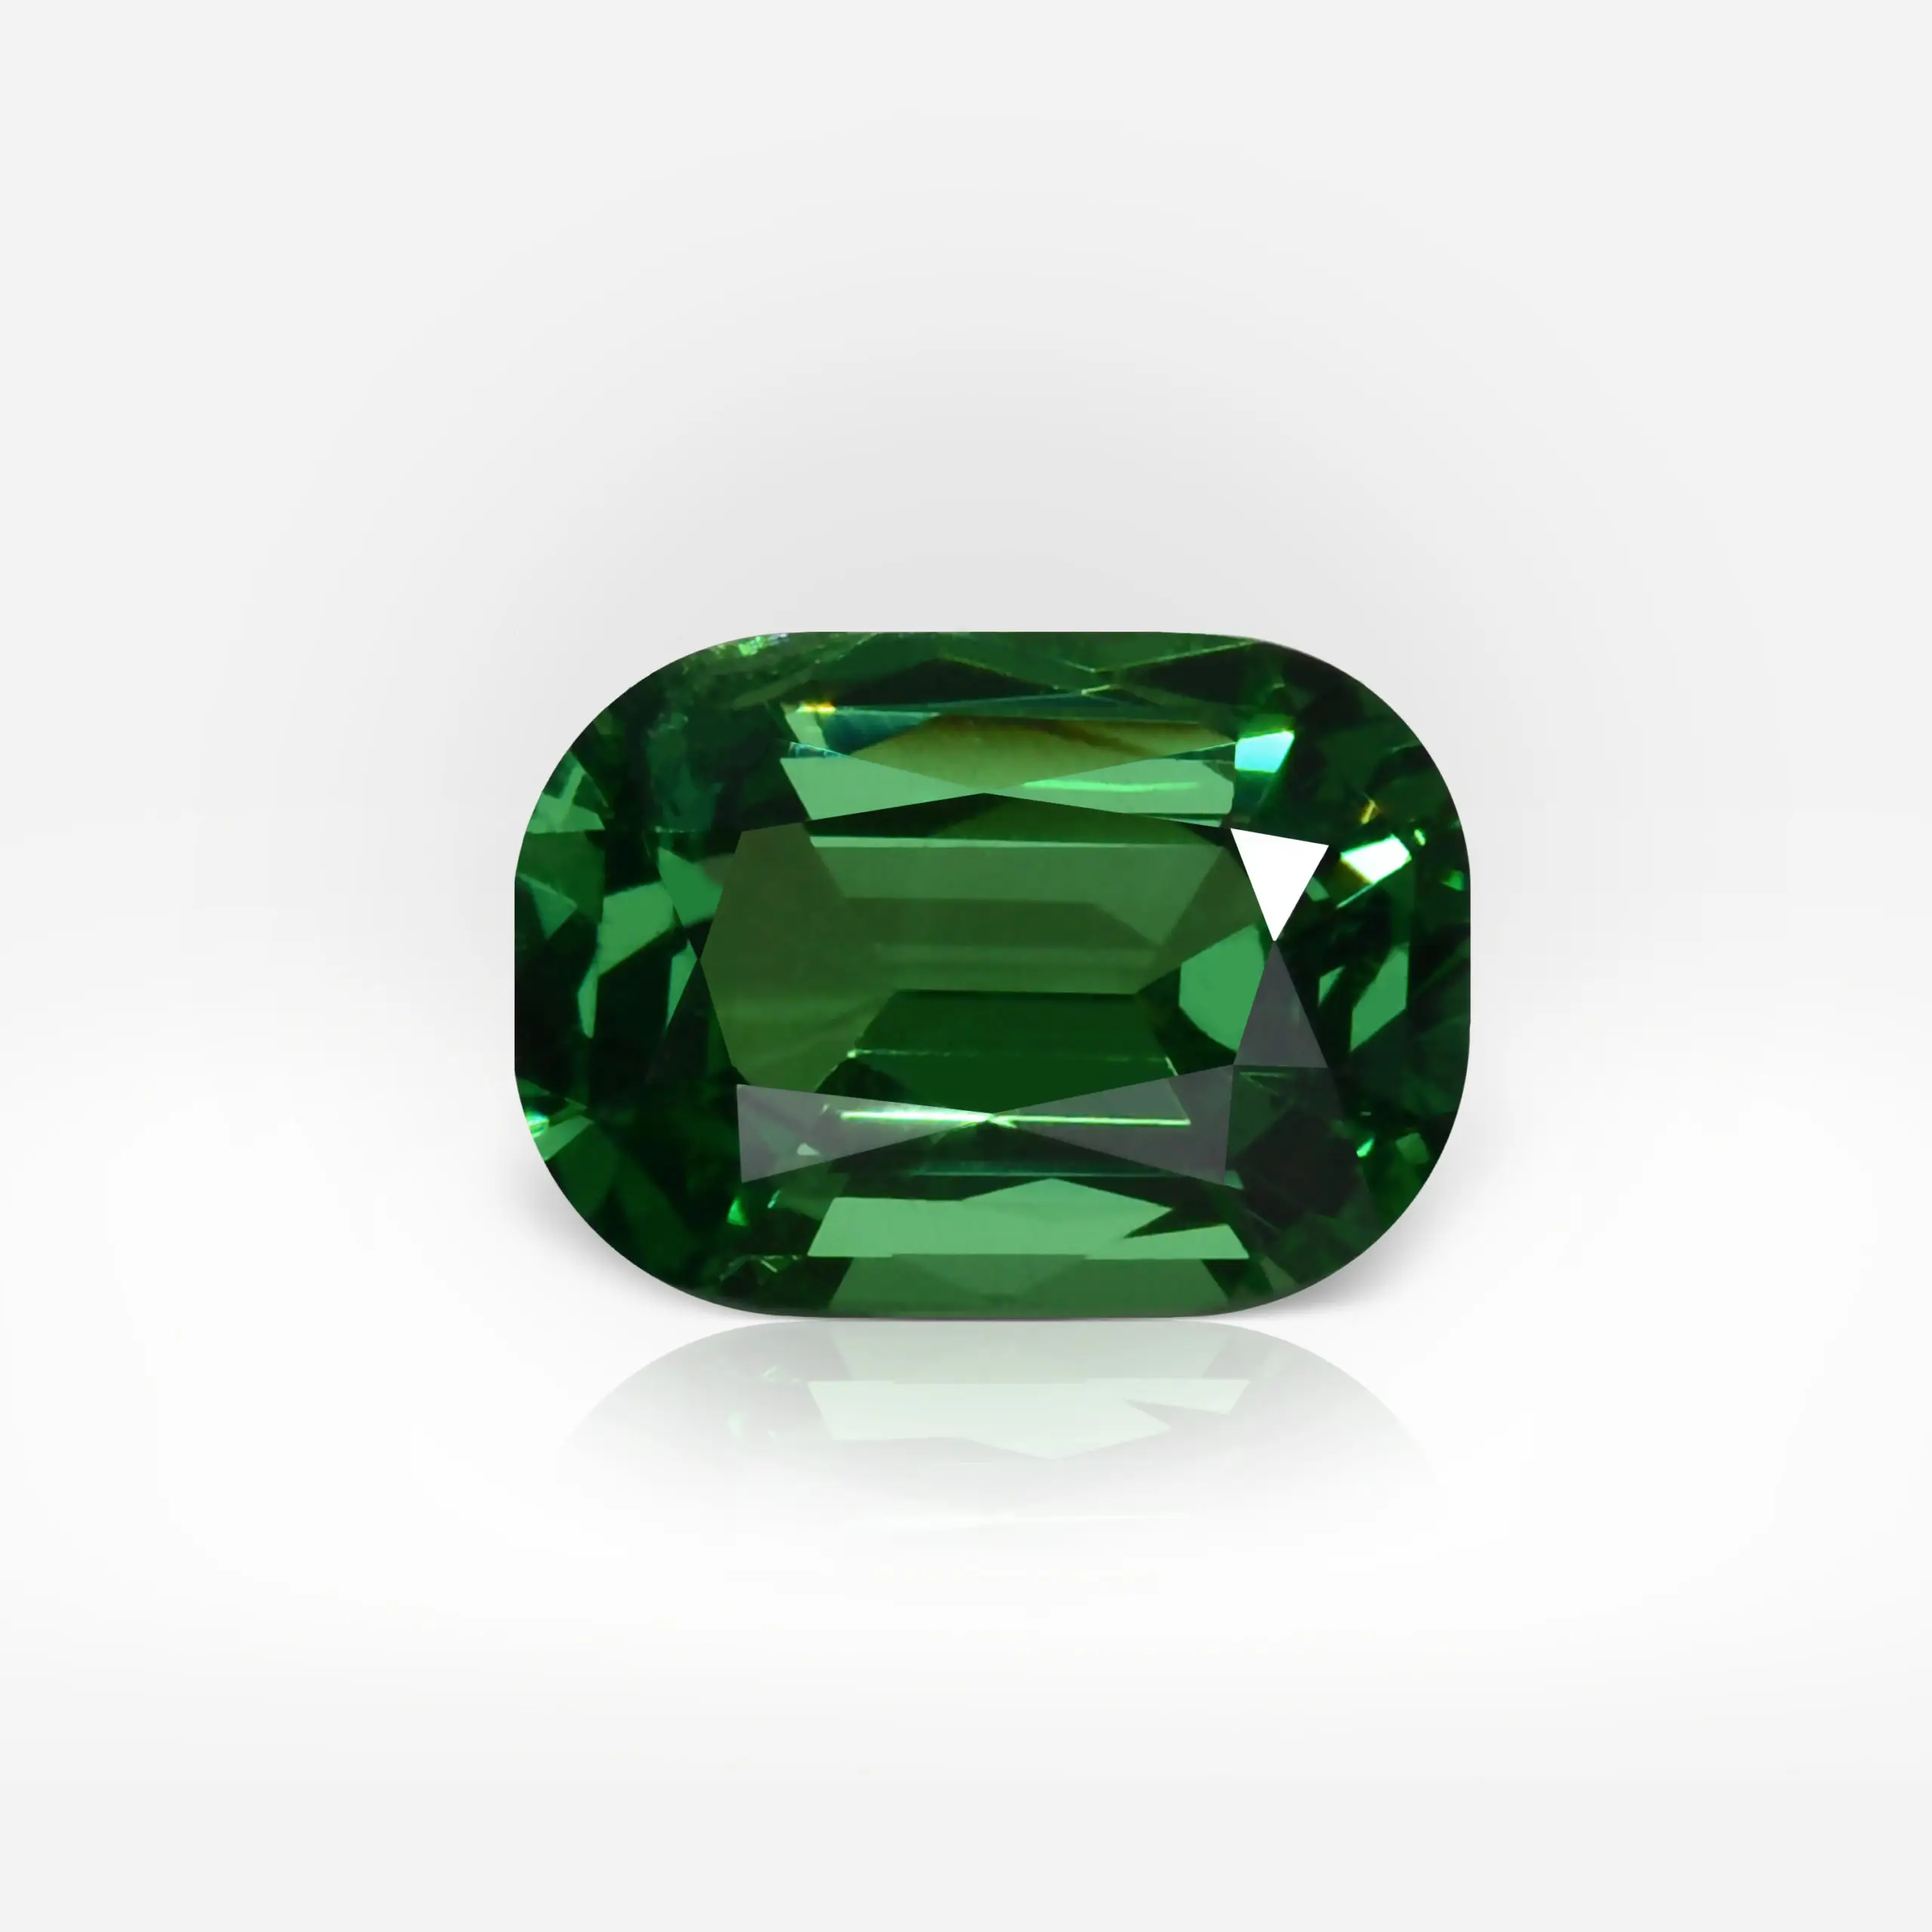 1.13 carat Cushion Shape Green Tsavorite - picture 1